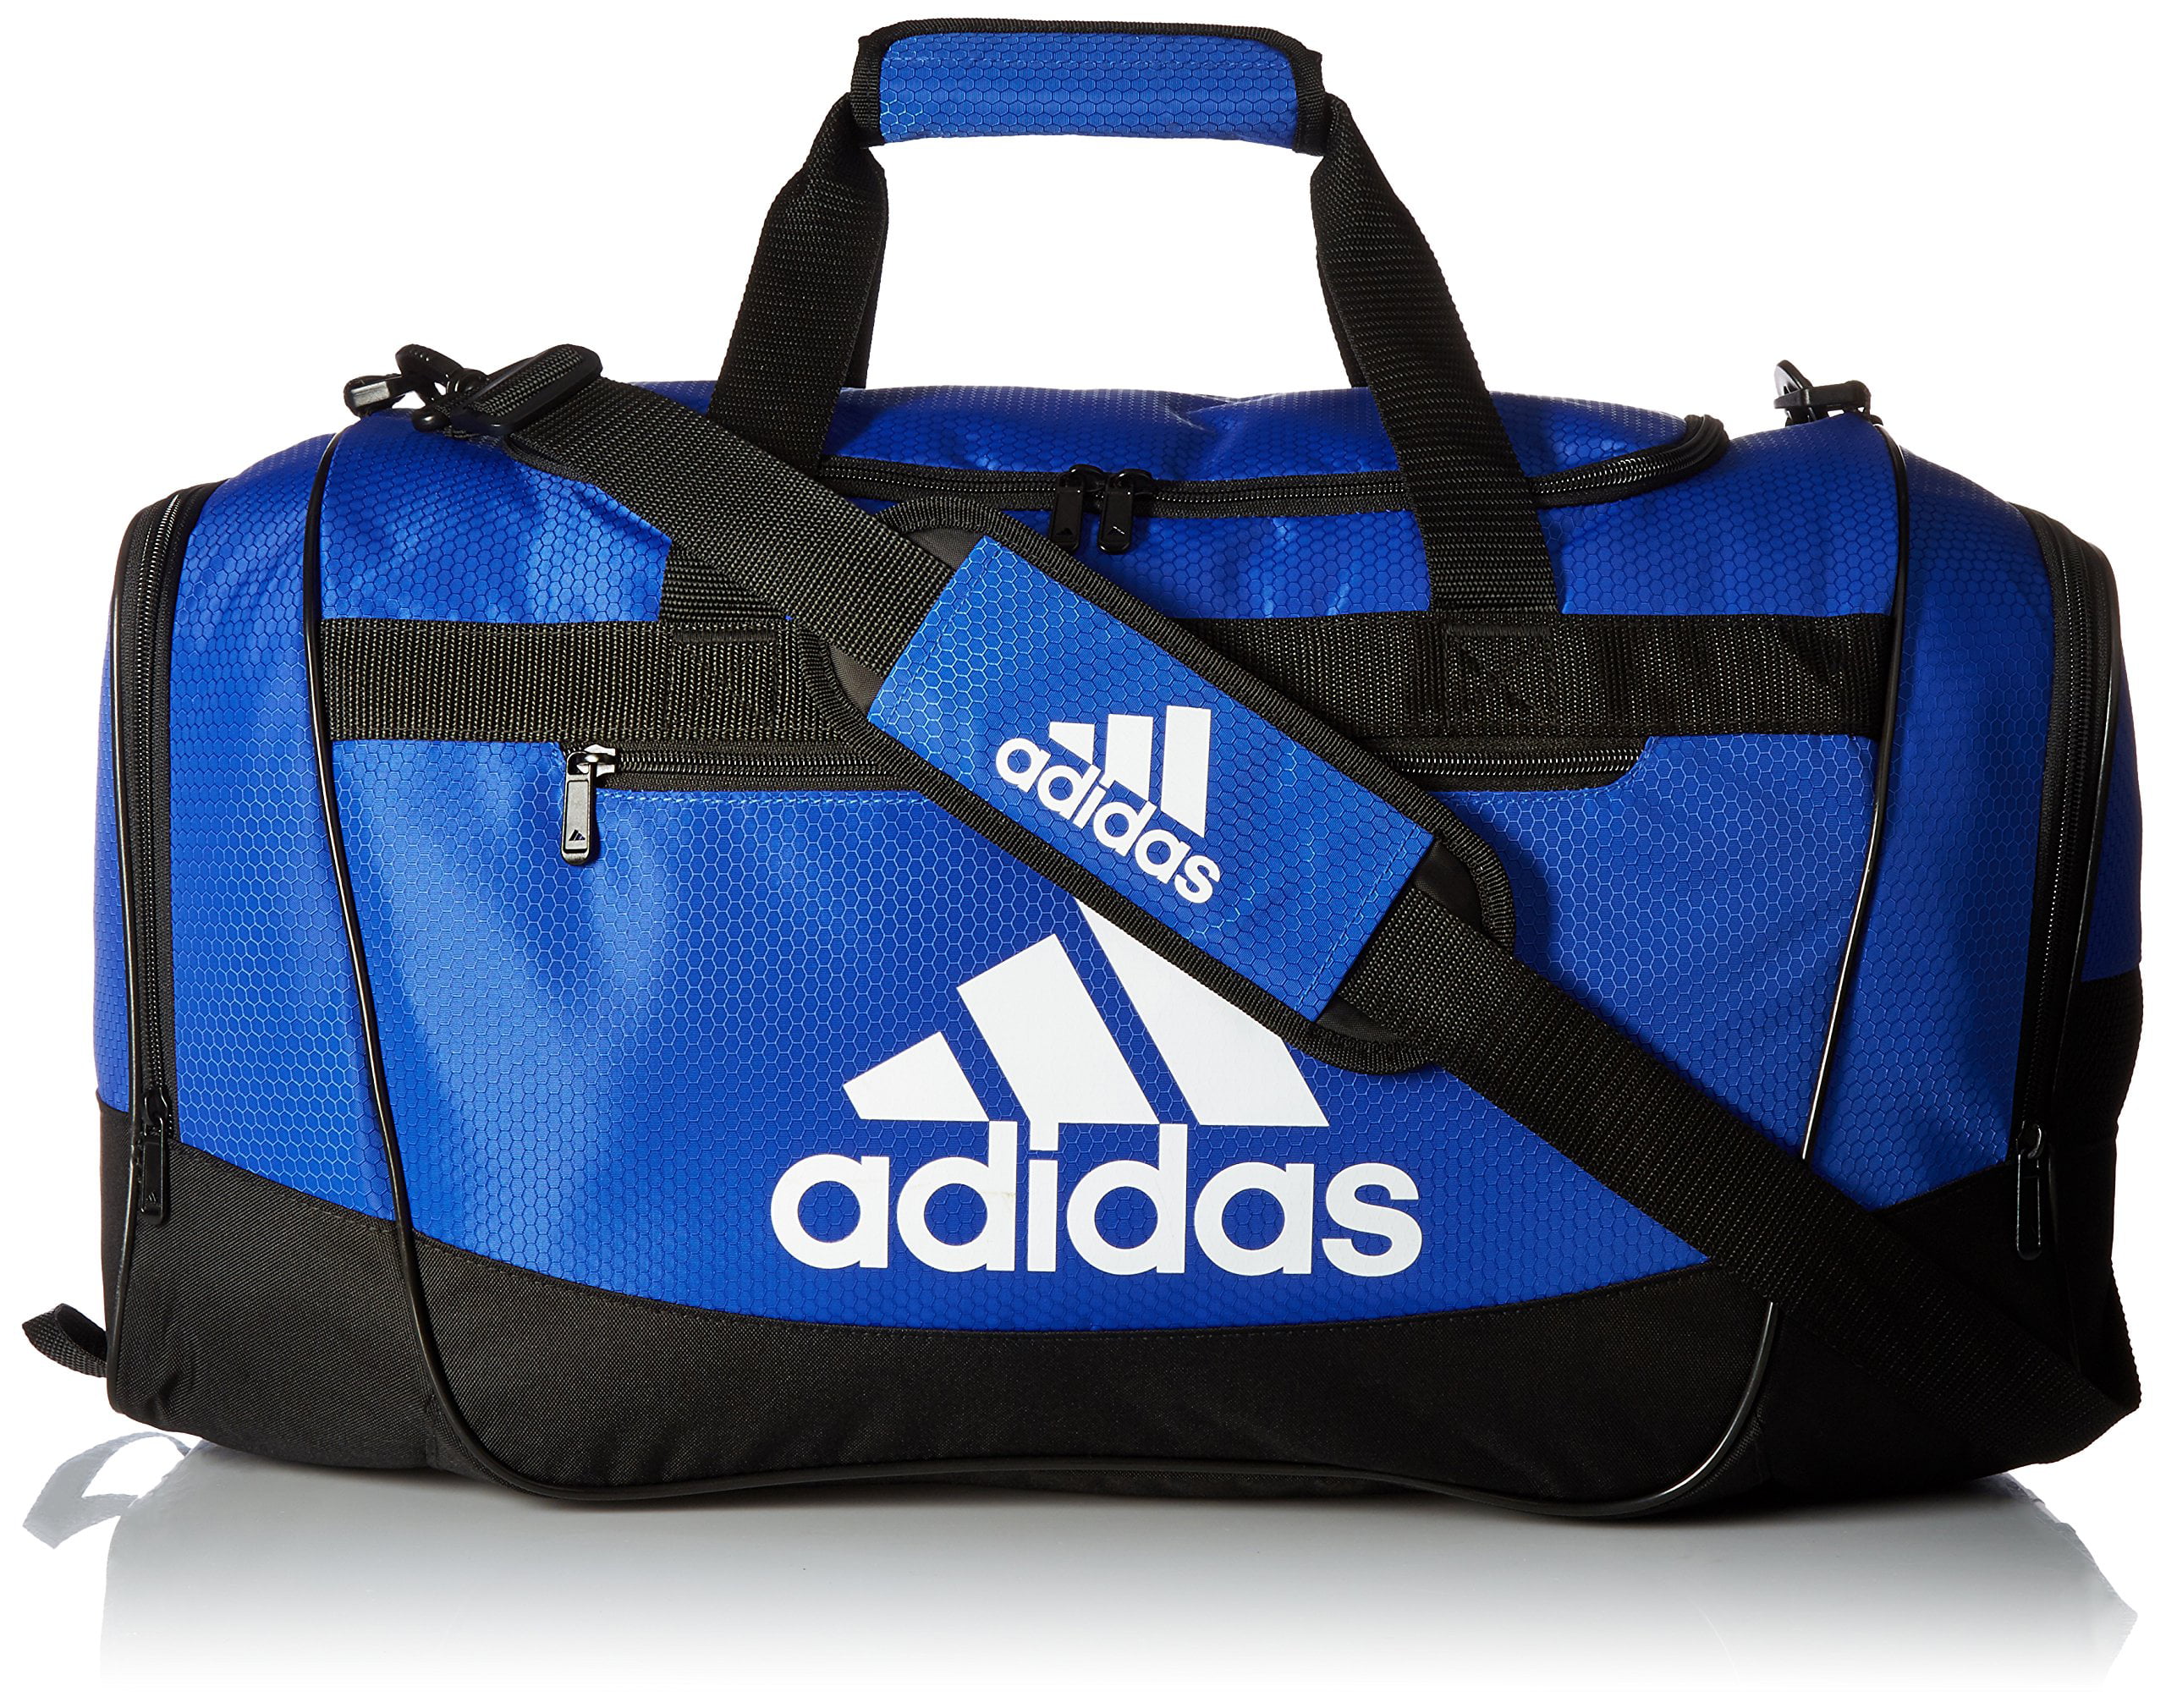 Adidas Defender Iii Duffel Bag Adidas - Ships Directly From Adidas